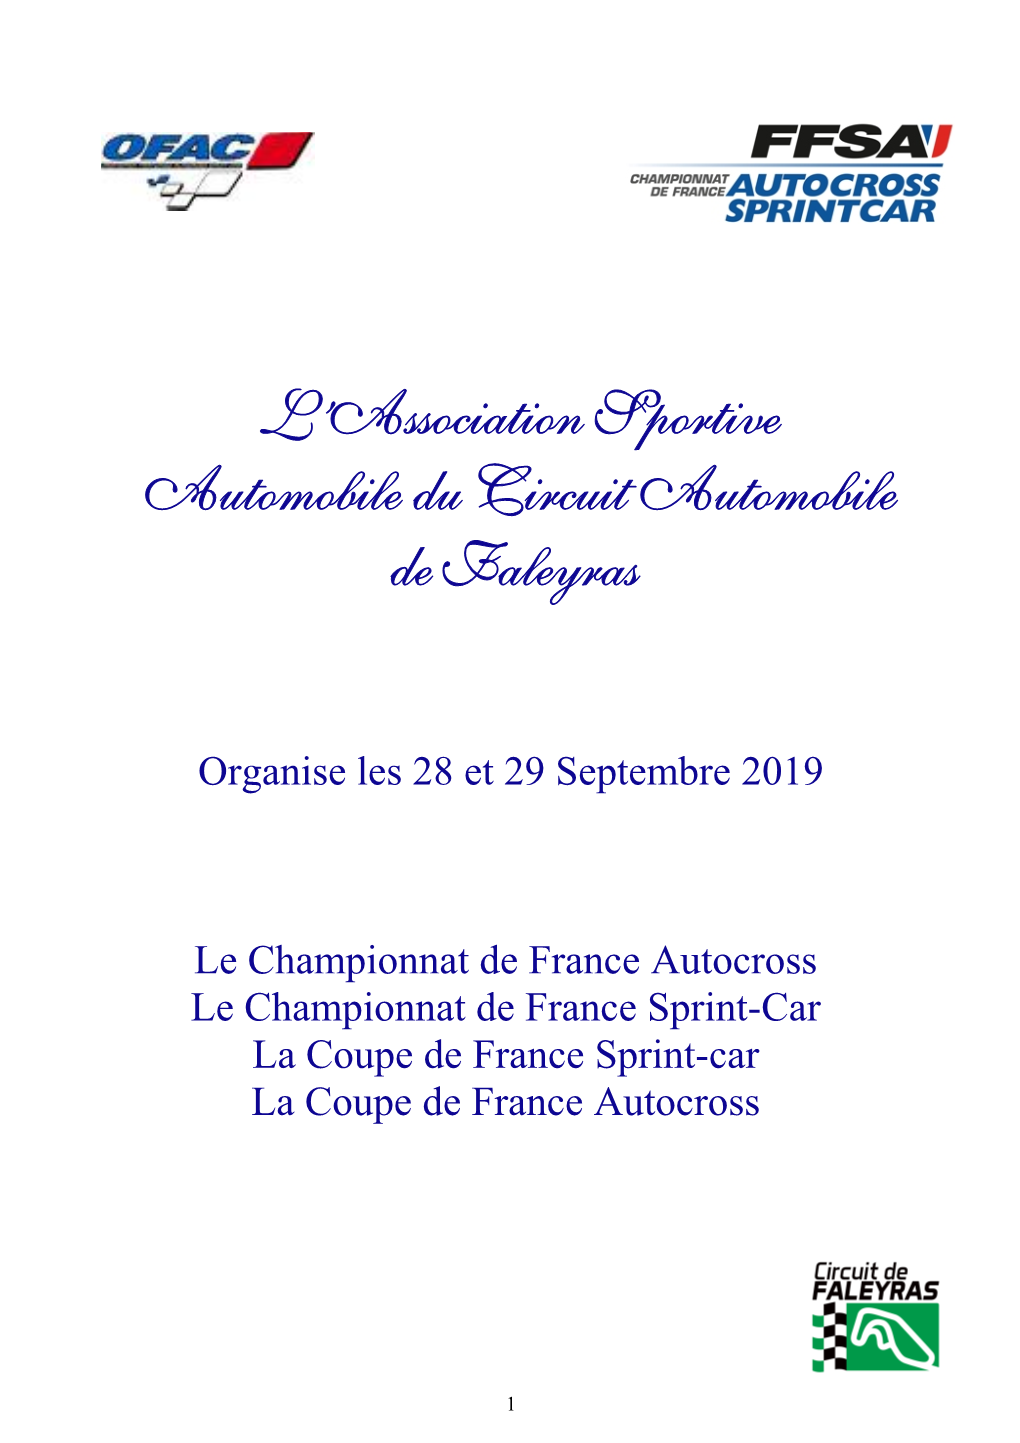 L'association Sportive Automobile Du Circuit Automobile De Faleyras